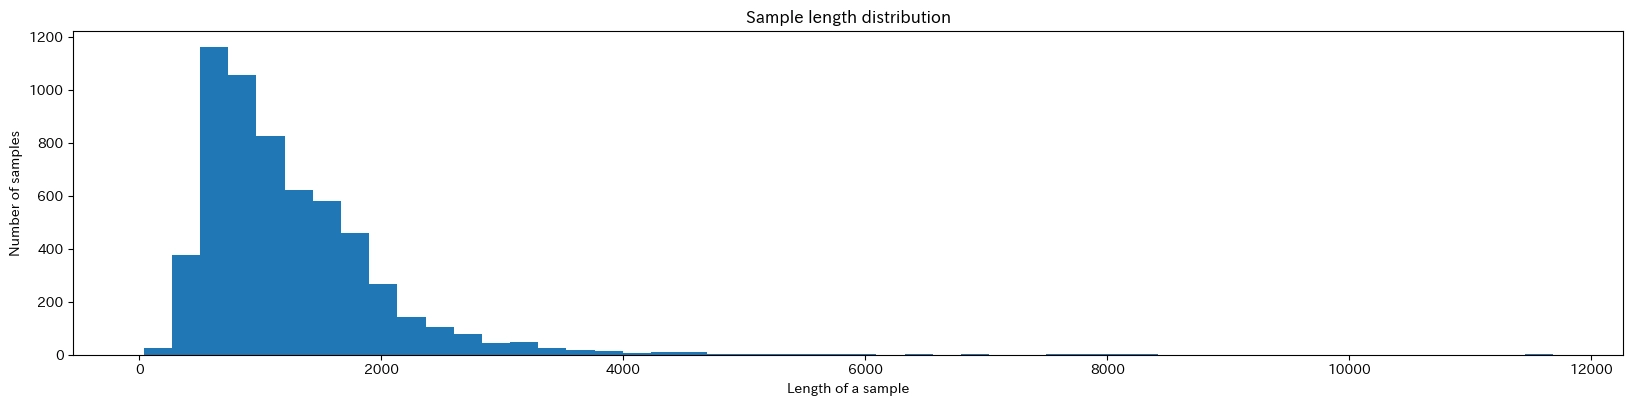 sample length